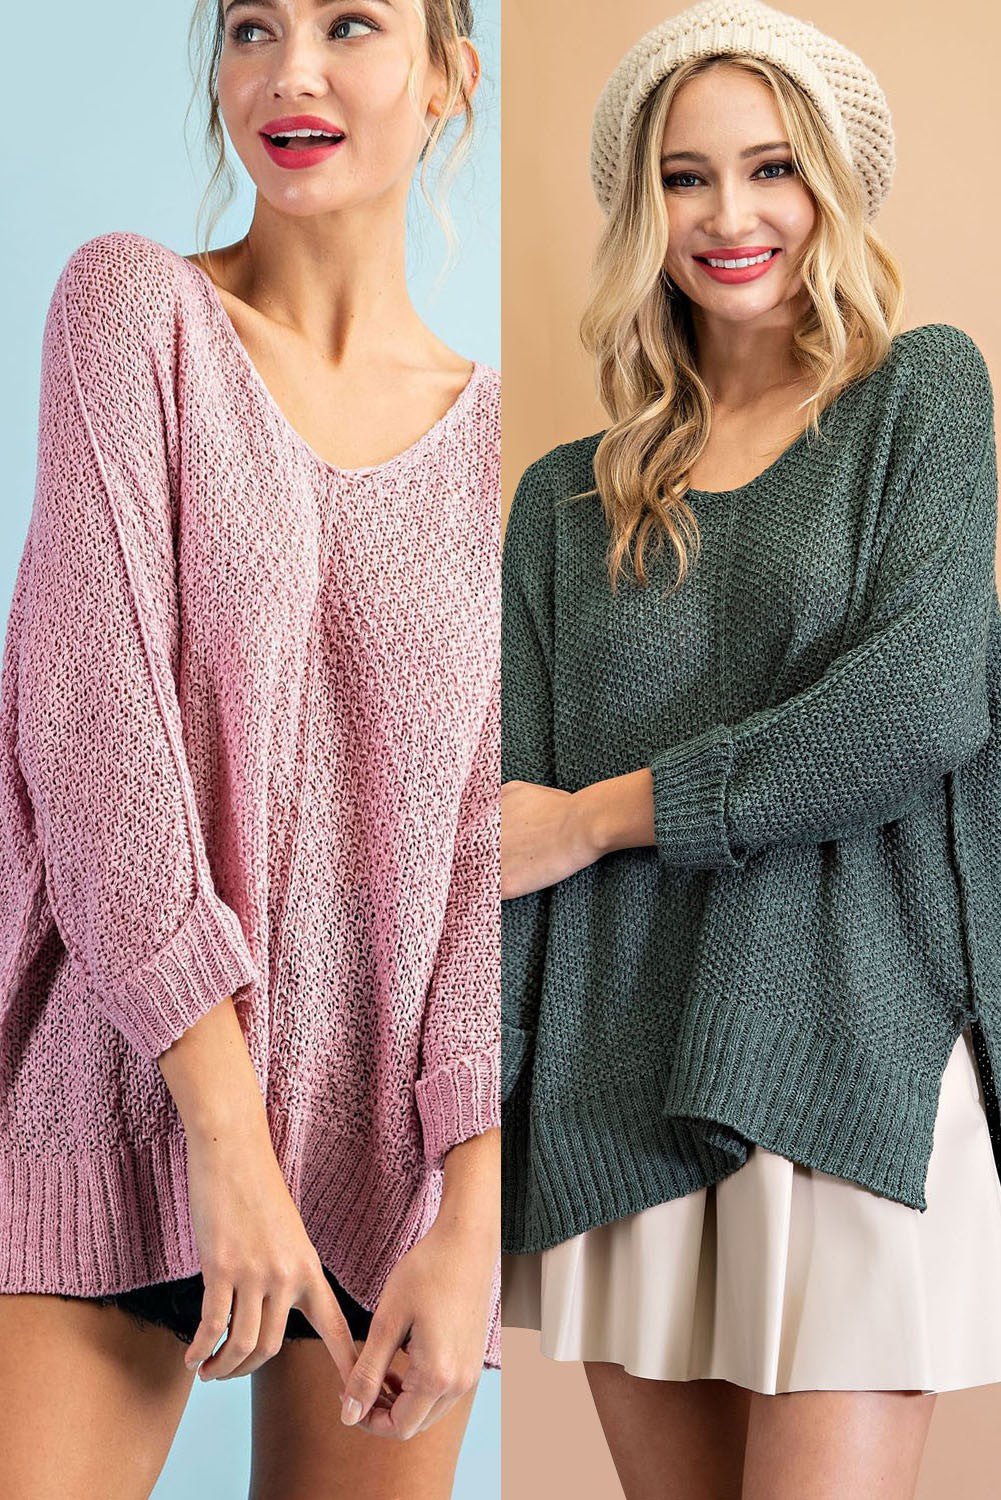 Every Season Sweater - Coco, Gray or Smokey Green